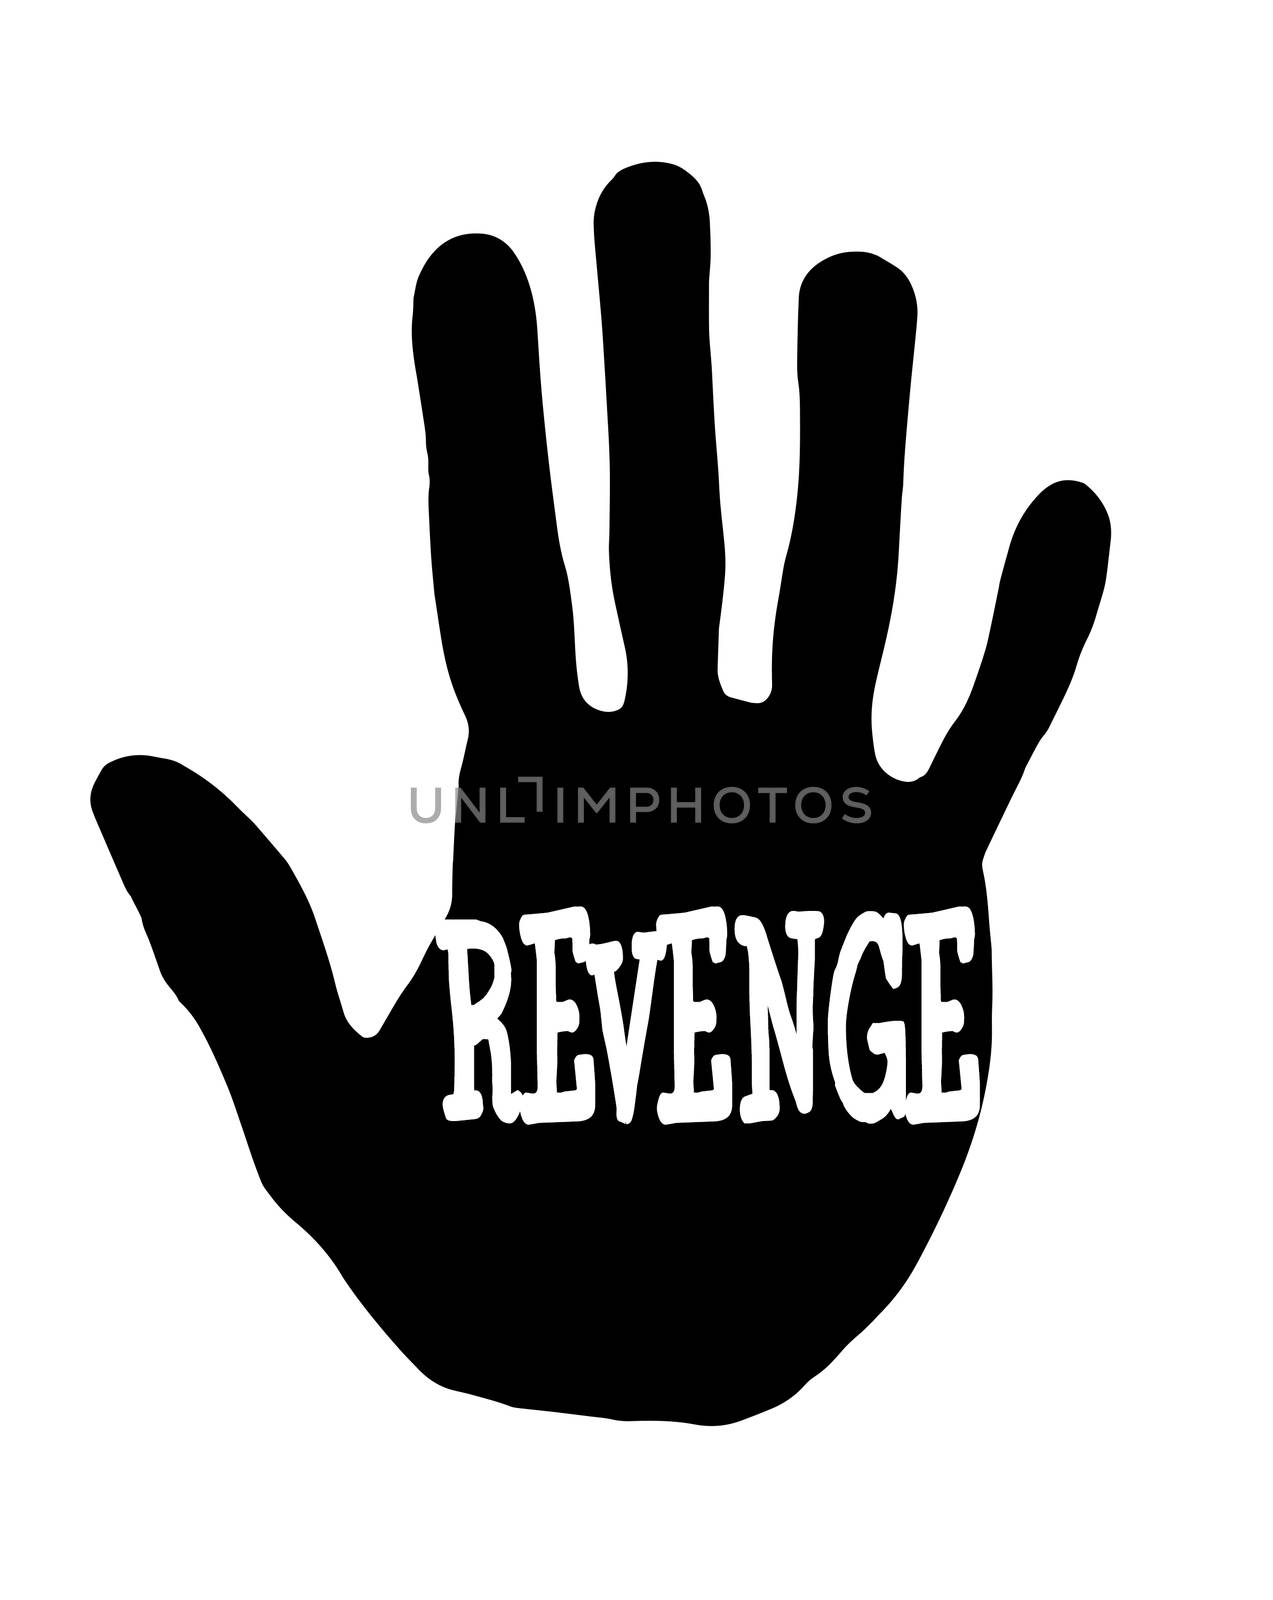 Man handprint isolated on white background showing stop revenge